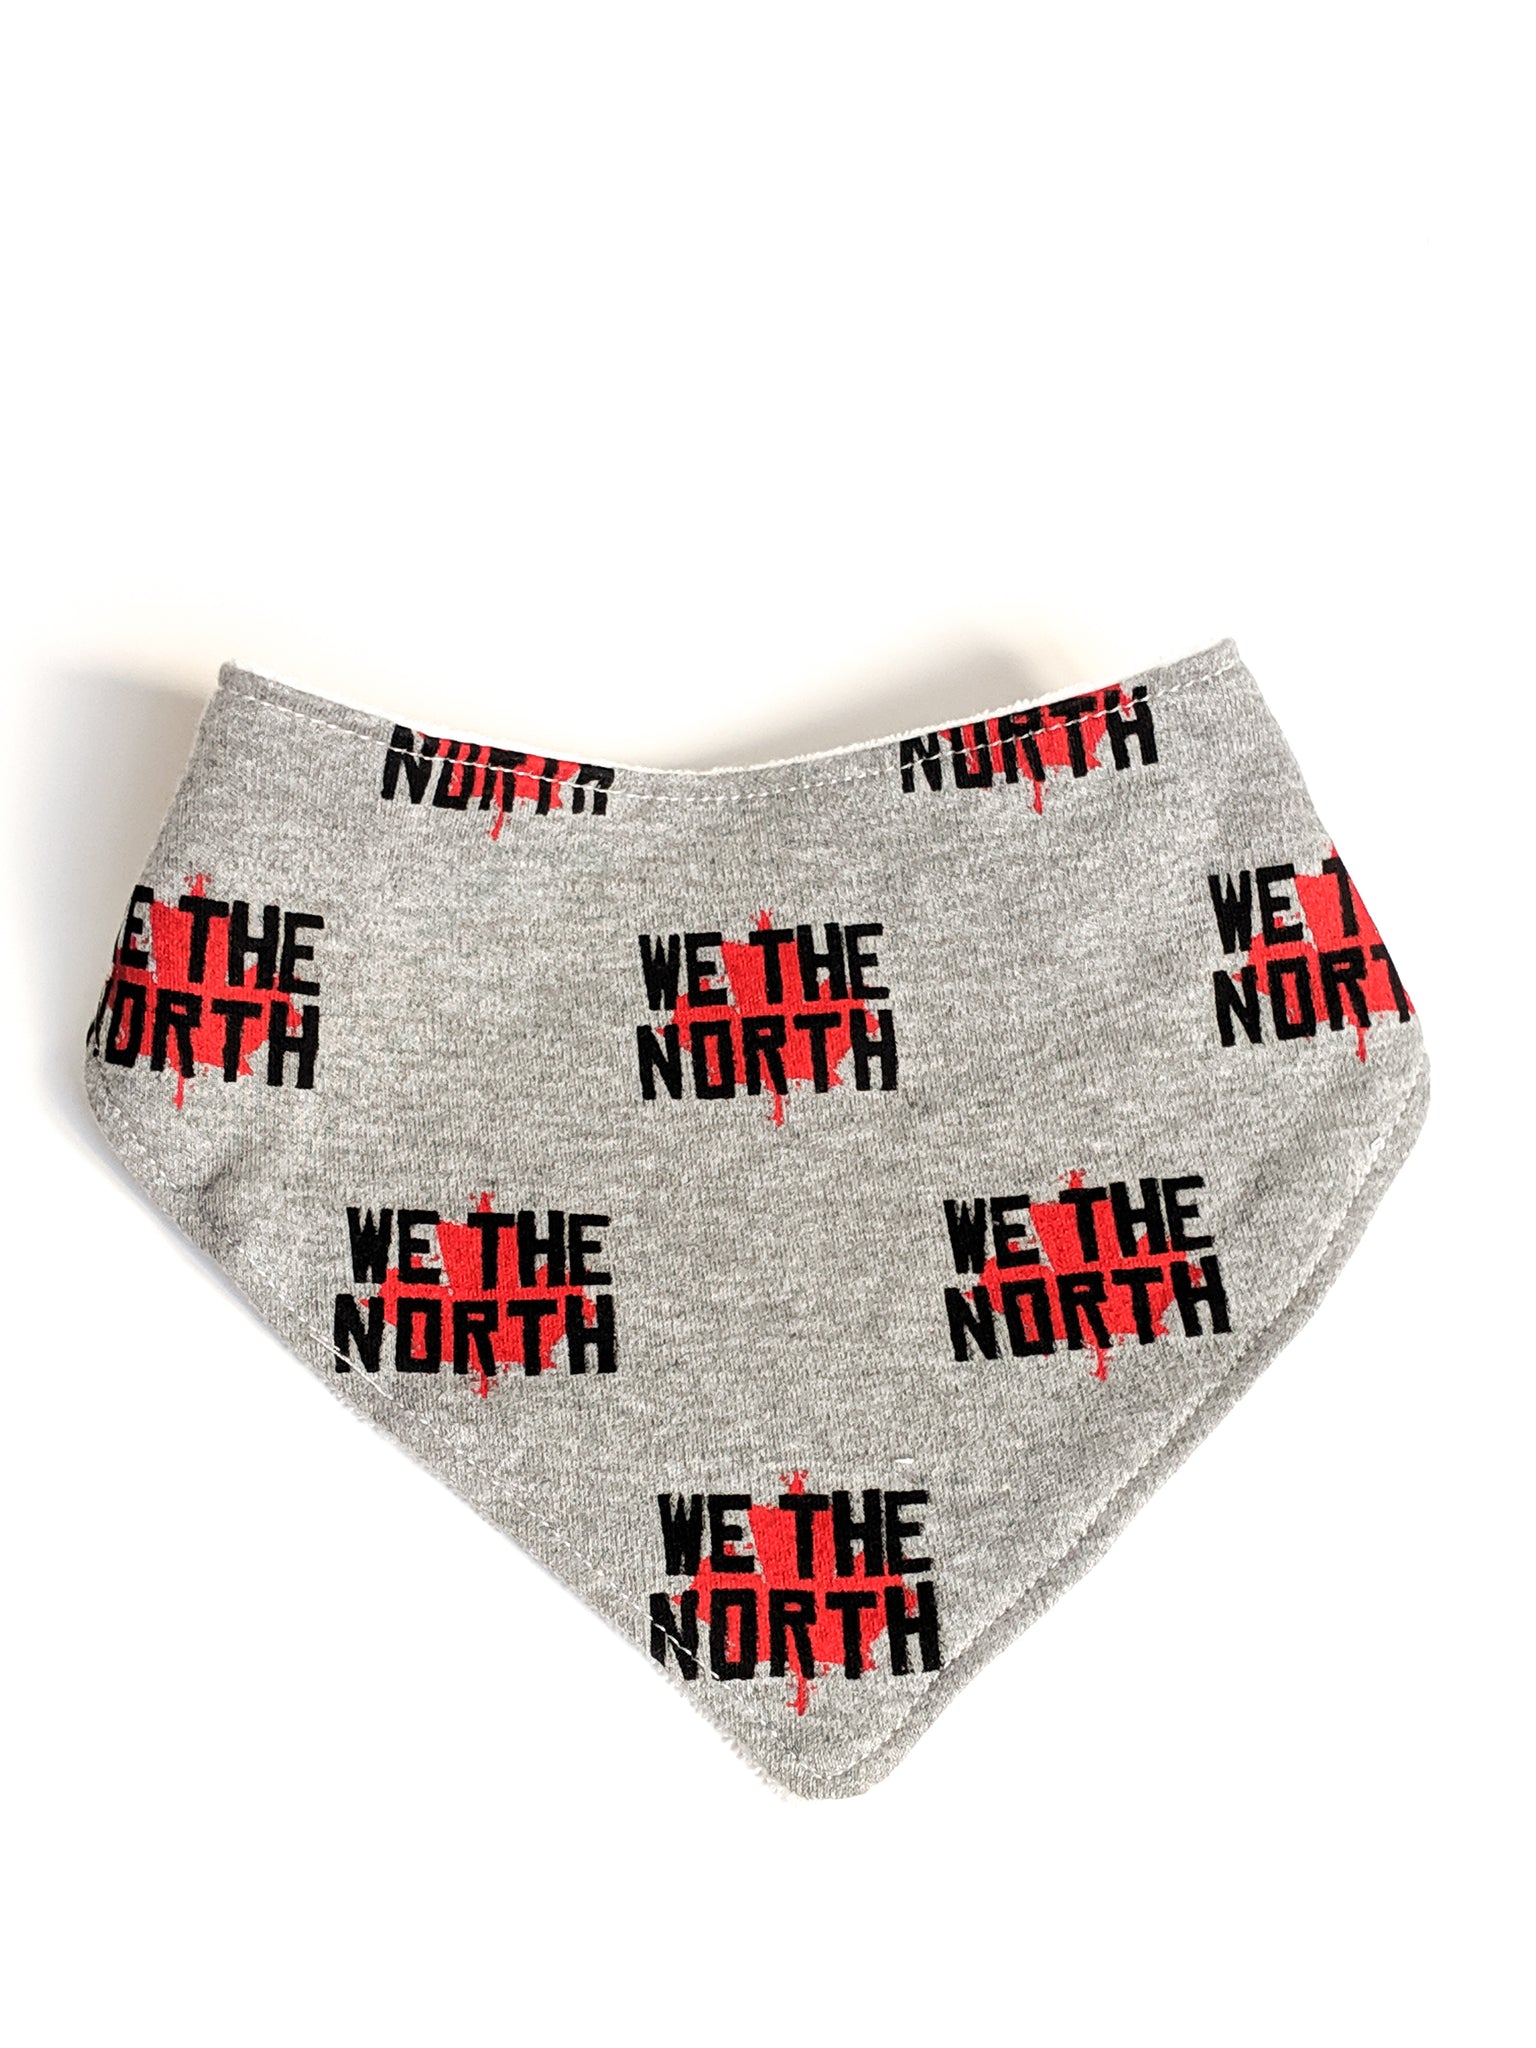 We The North Bib – Yara Bean's Boutique